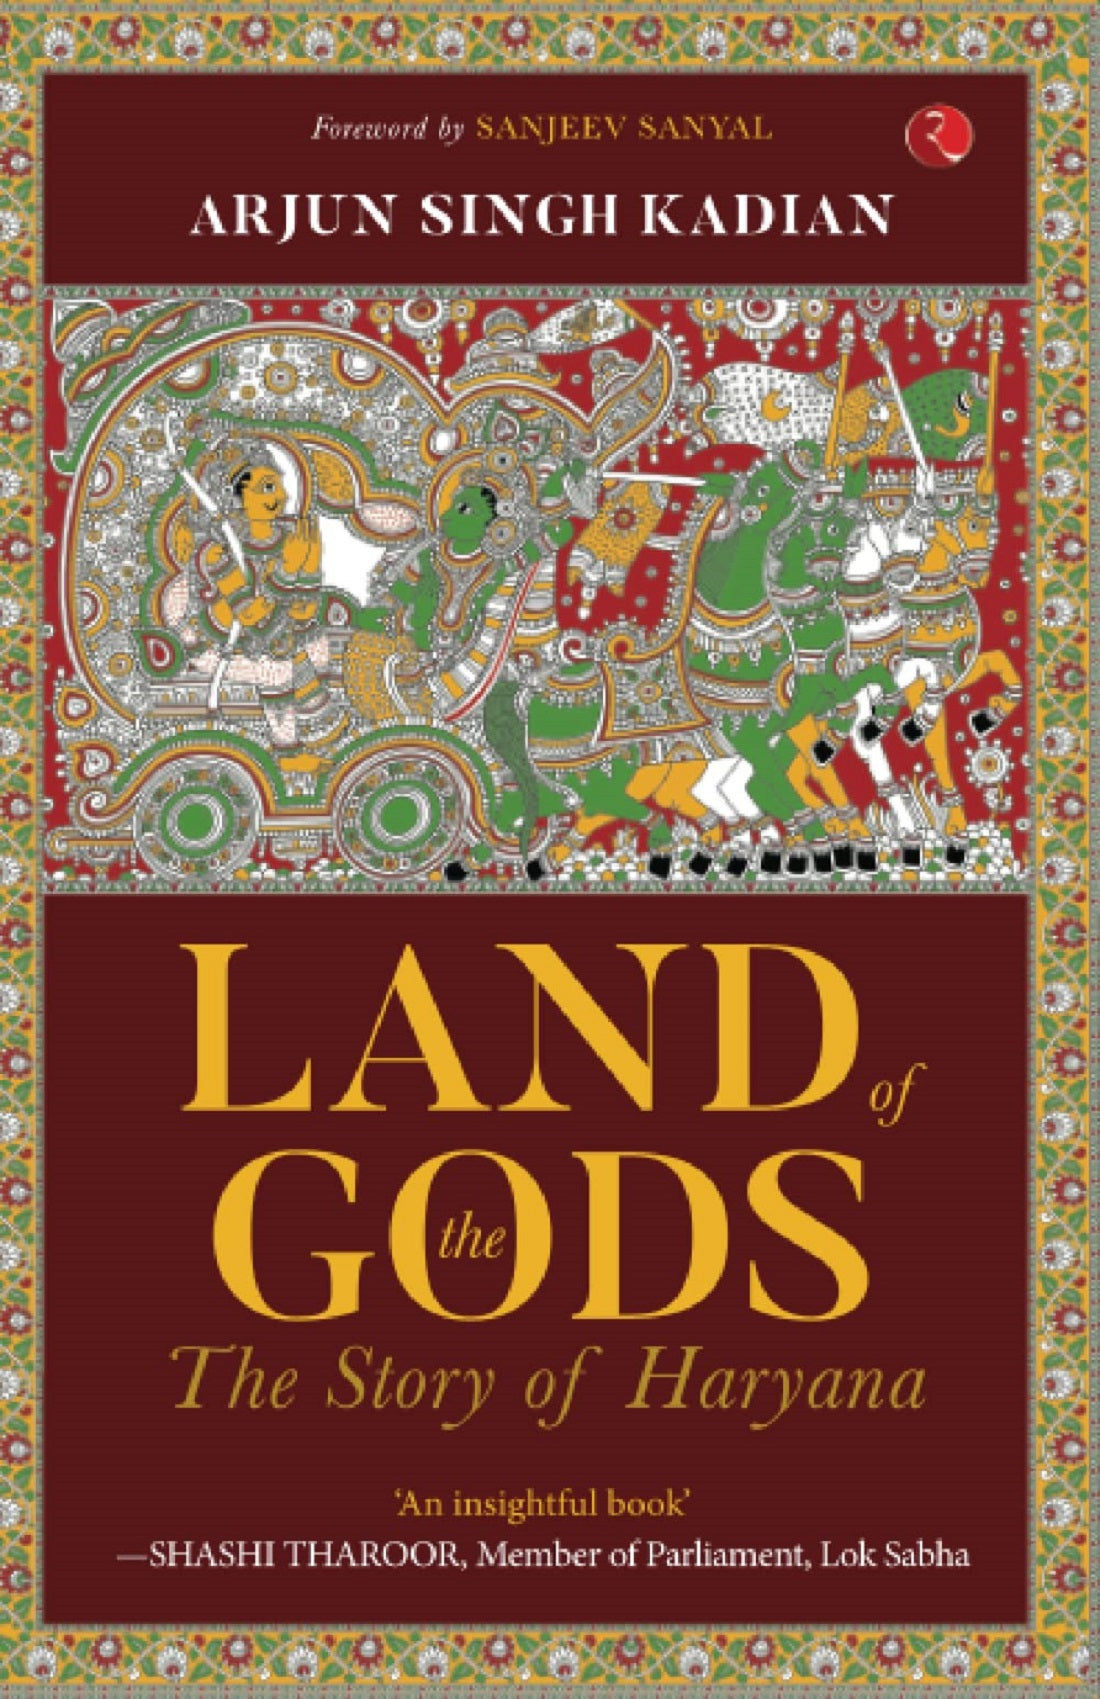 LAND OF GODS THE STORY OF HARYANA